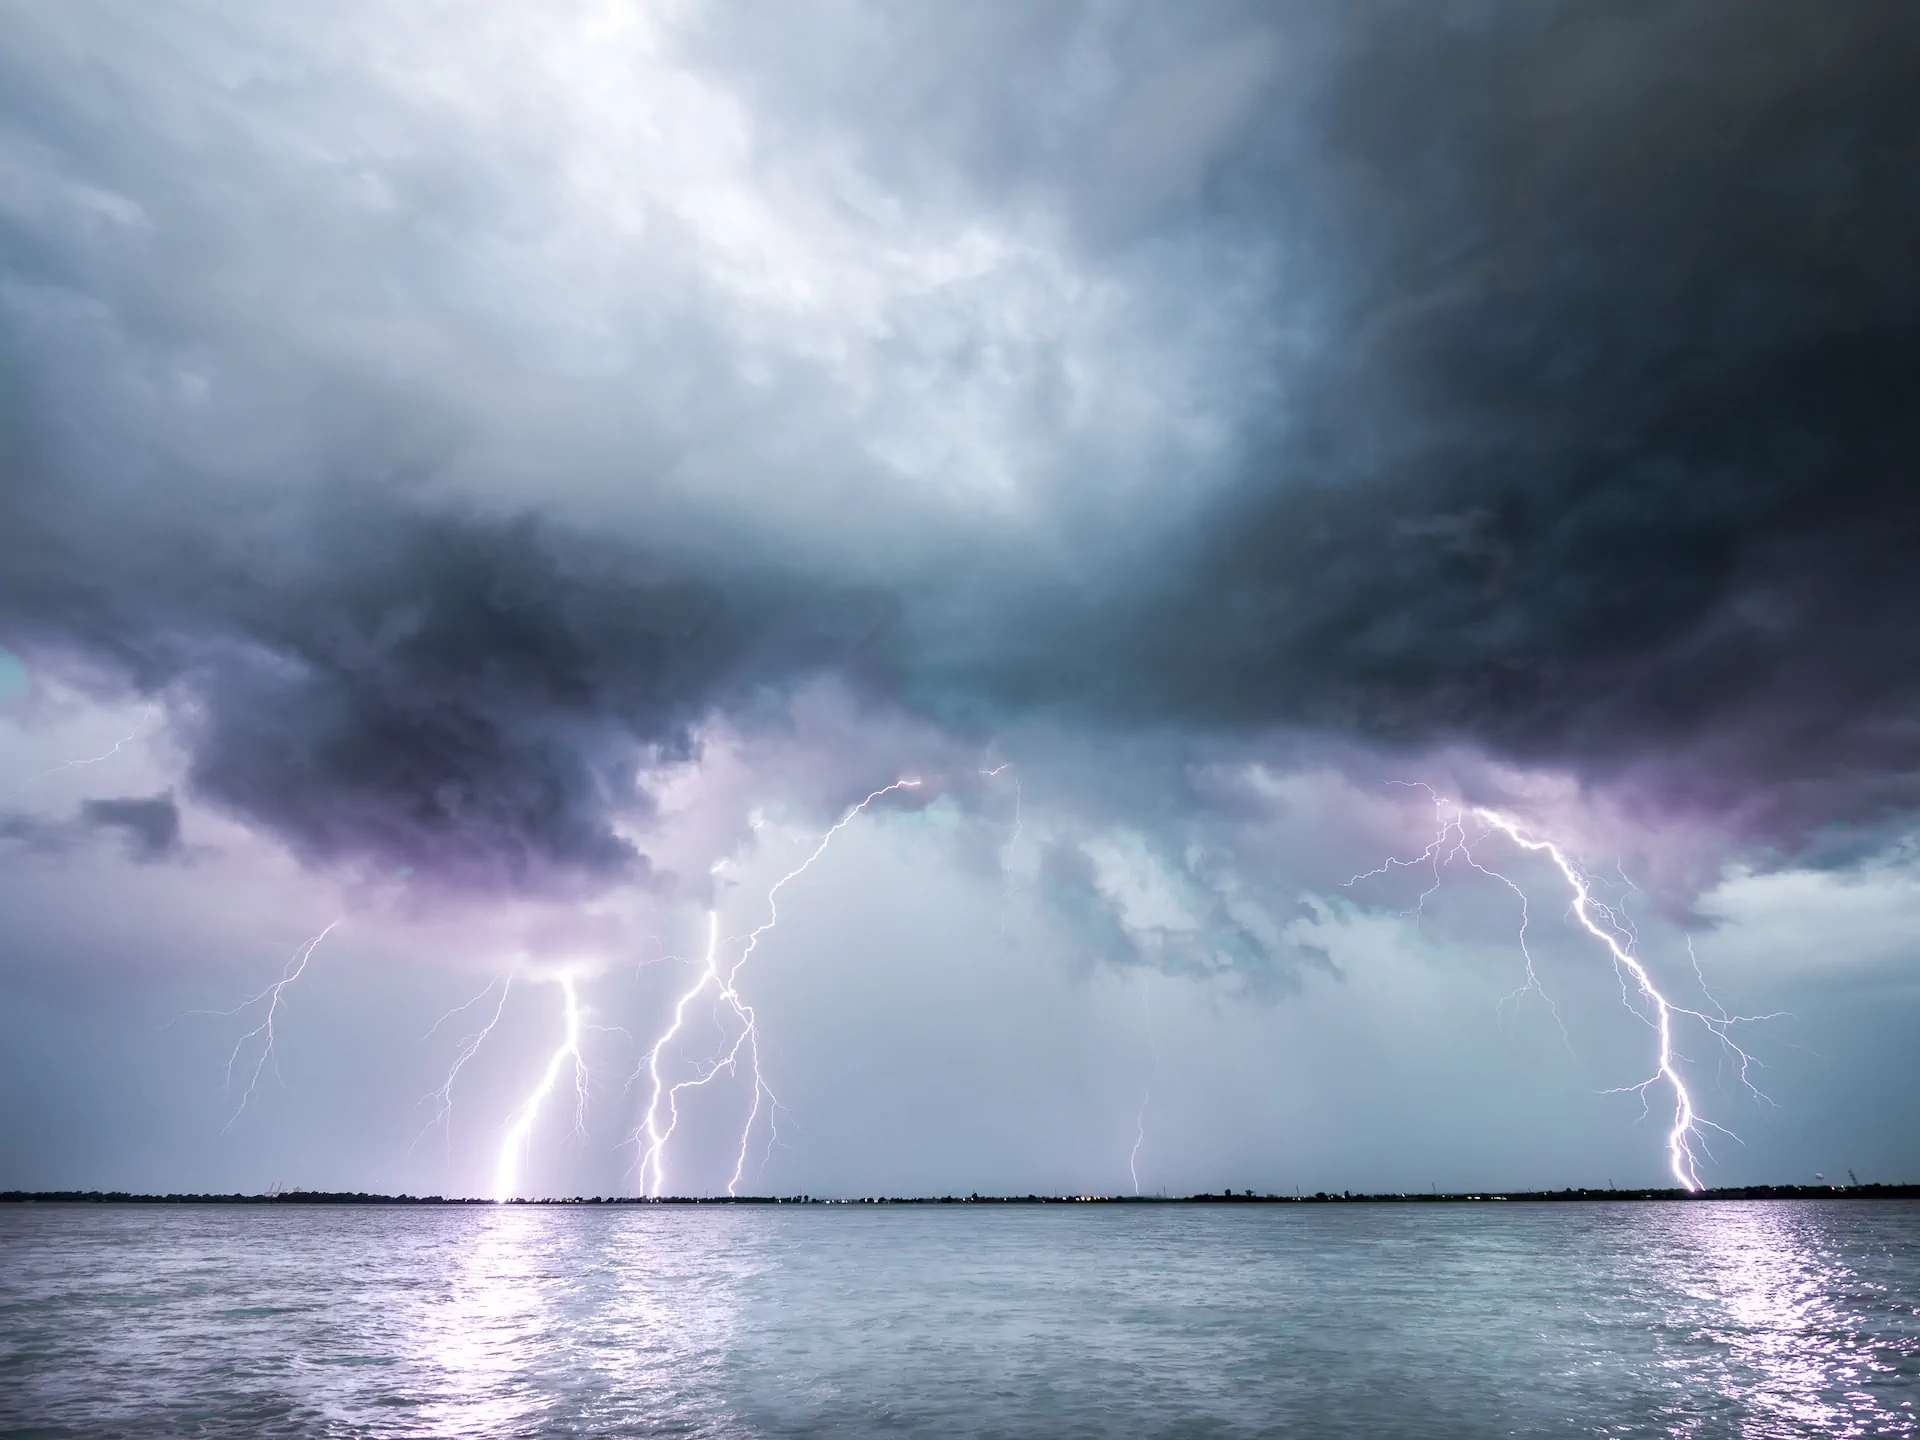 Stormy Skies image by Raychel Sanner at Unsplash